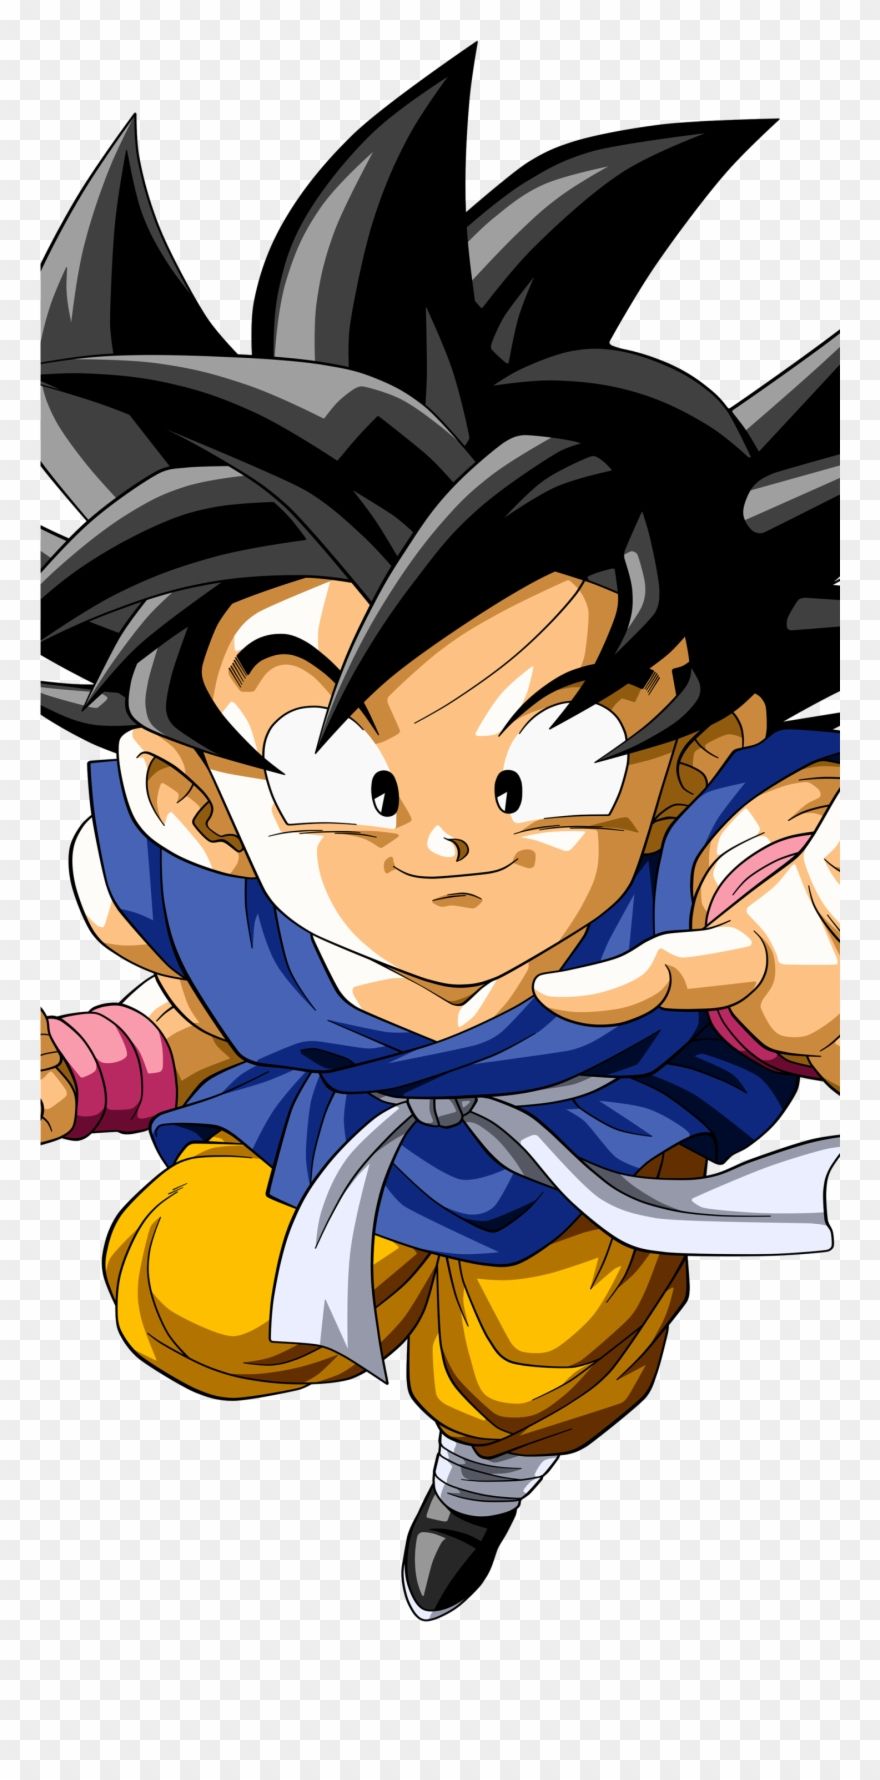 Kid Goku Anime / Dragon Ball Gt Mobile Wallpaper Wallpaper iPhone 7 Hypebesst Clipart